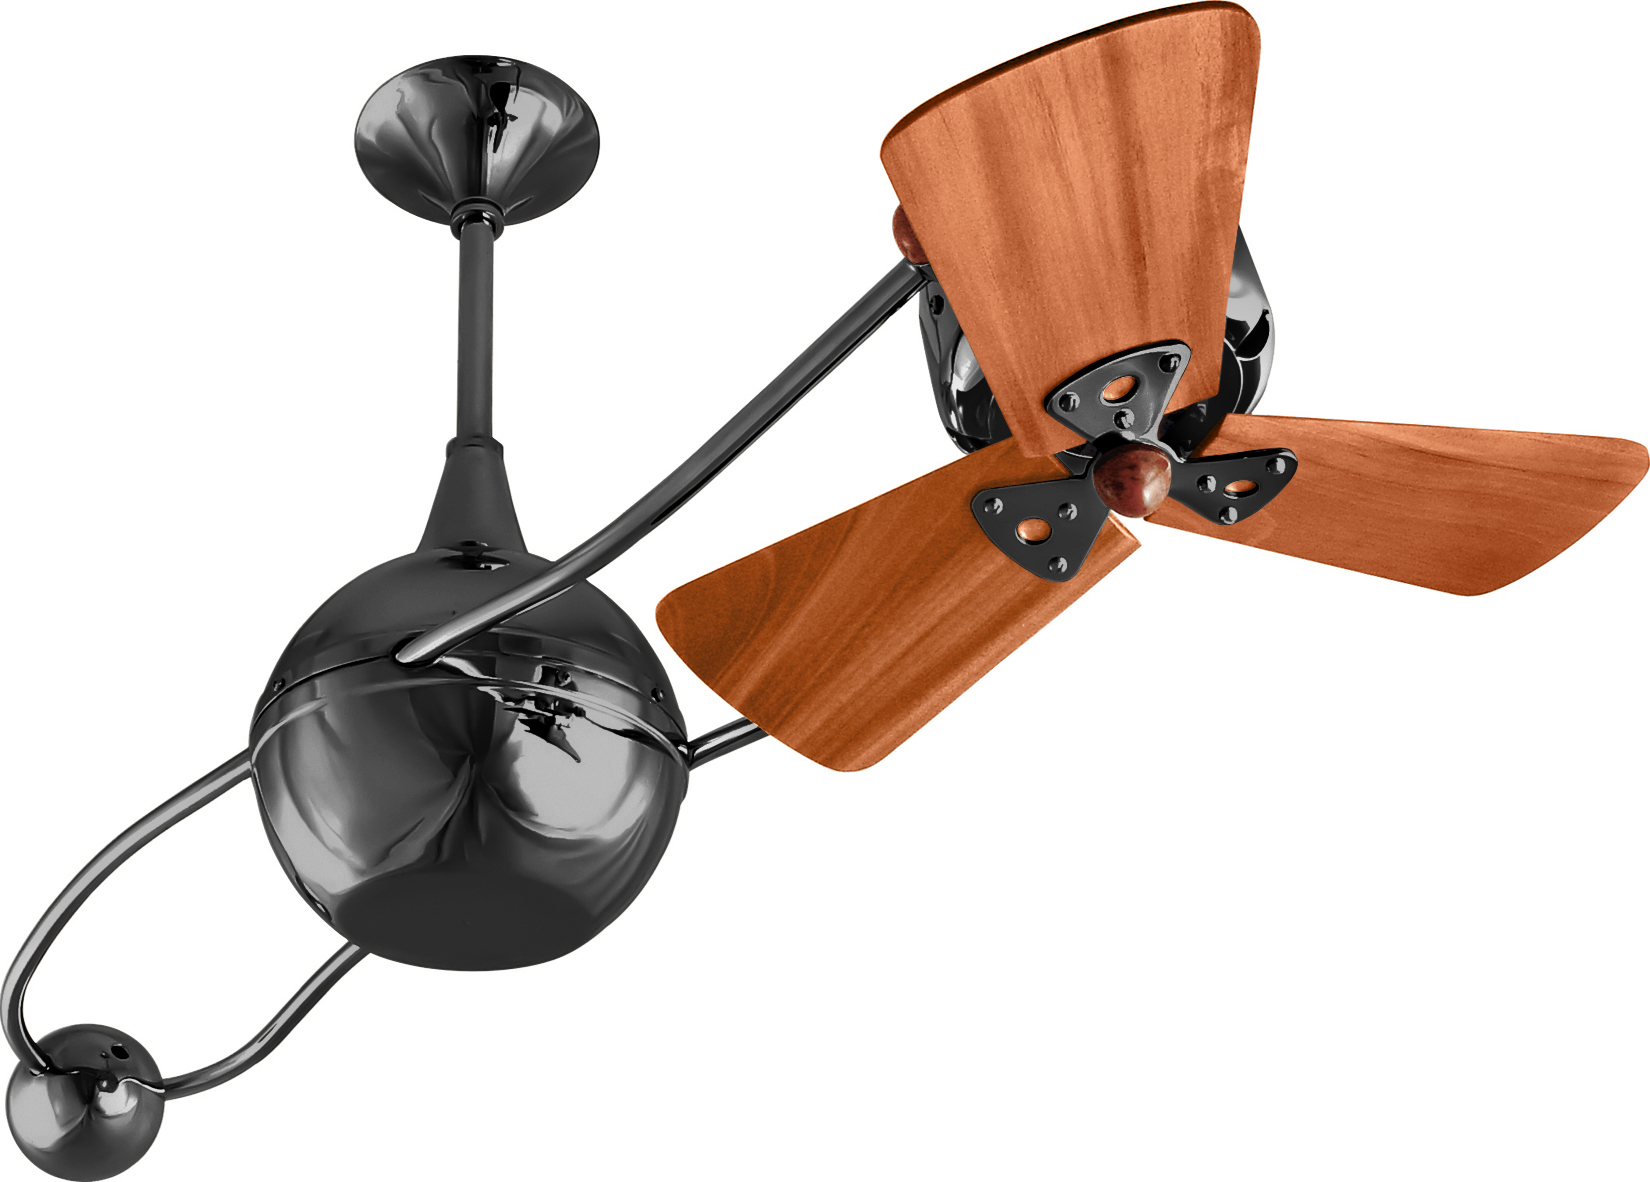 Brisa 2000 ceiling fan in black nickel finish with mahogany wood blades made by Matthews Fan Company.